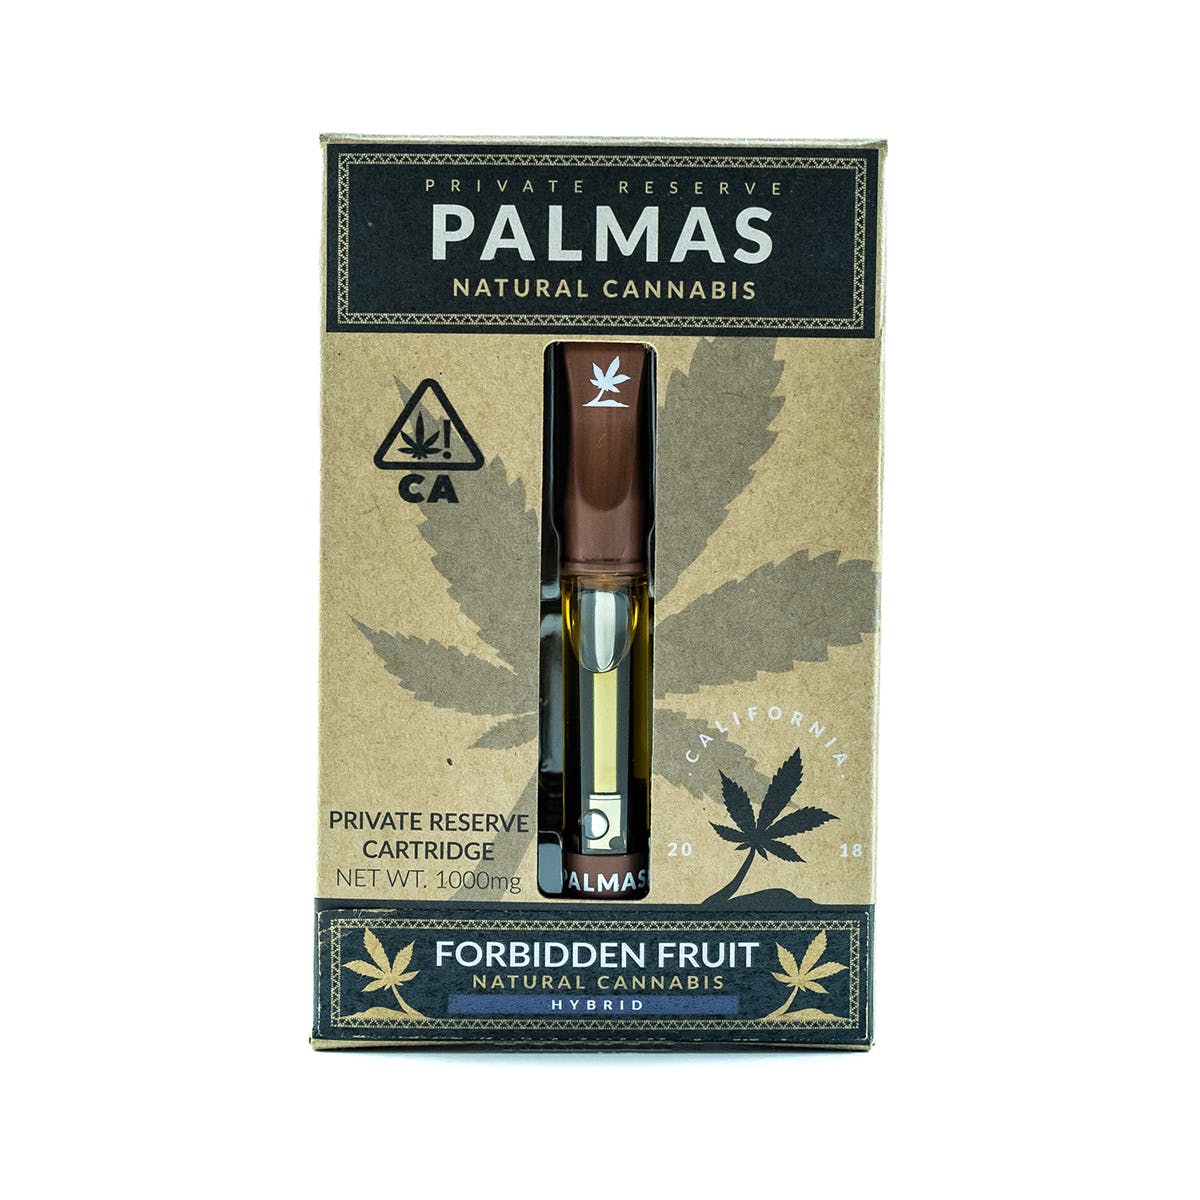 marijuana-dispensaries-og-central-20-cap-in-los-angeles-palmas-private-reserve-cartridge-forbidden-fruit